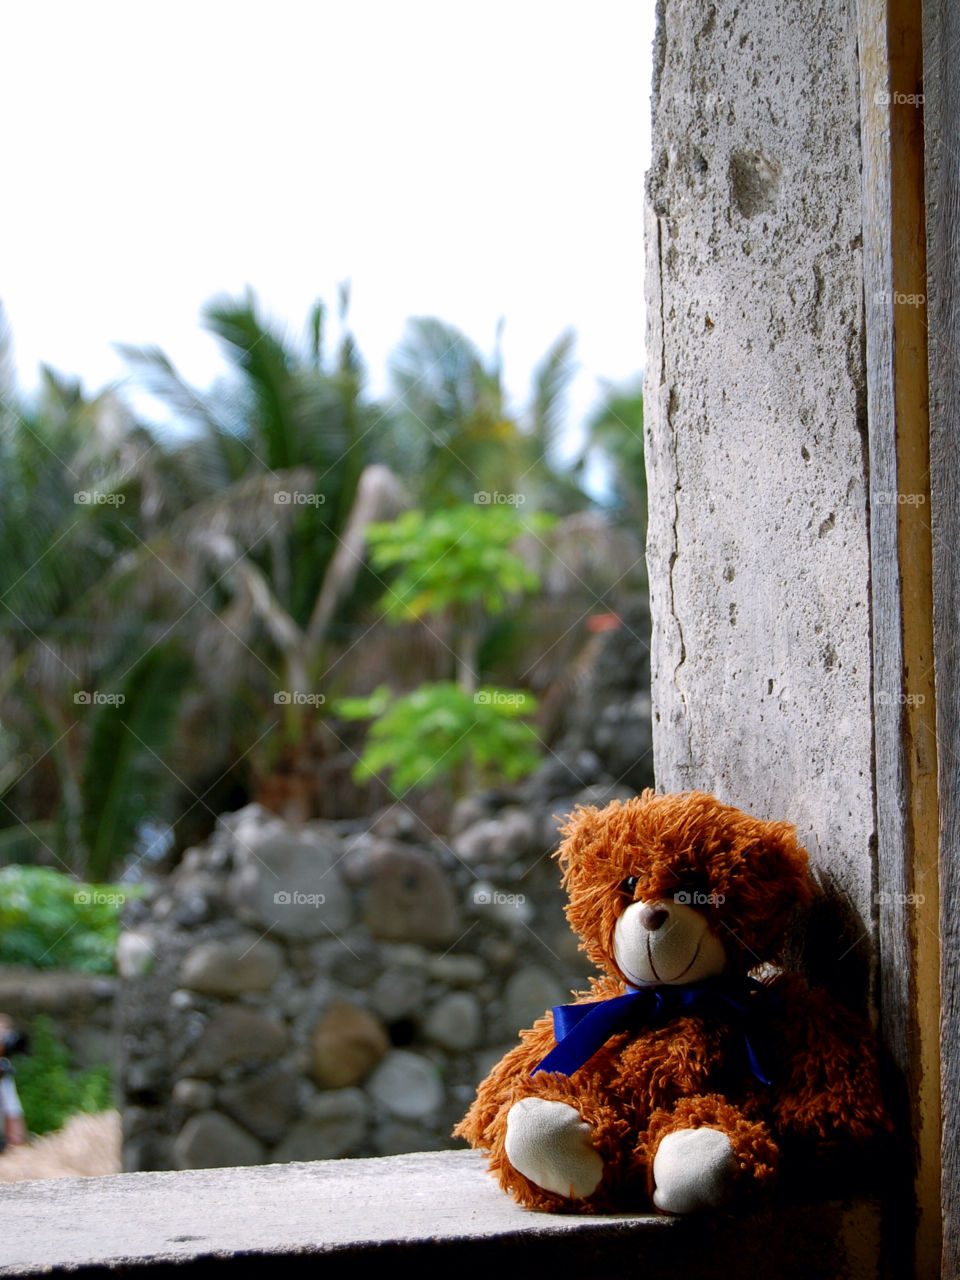 rural window sill teddy bear stone house by miake